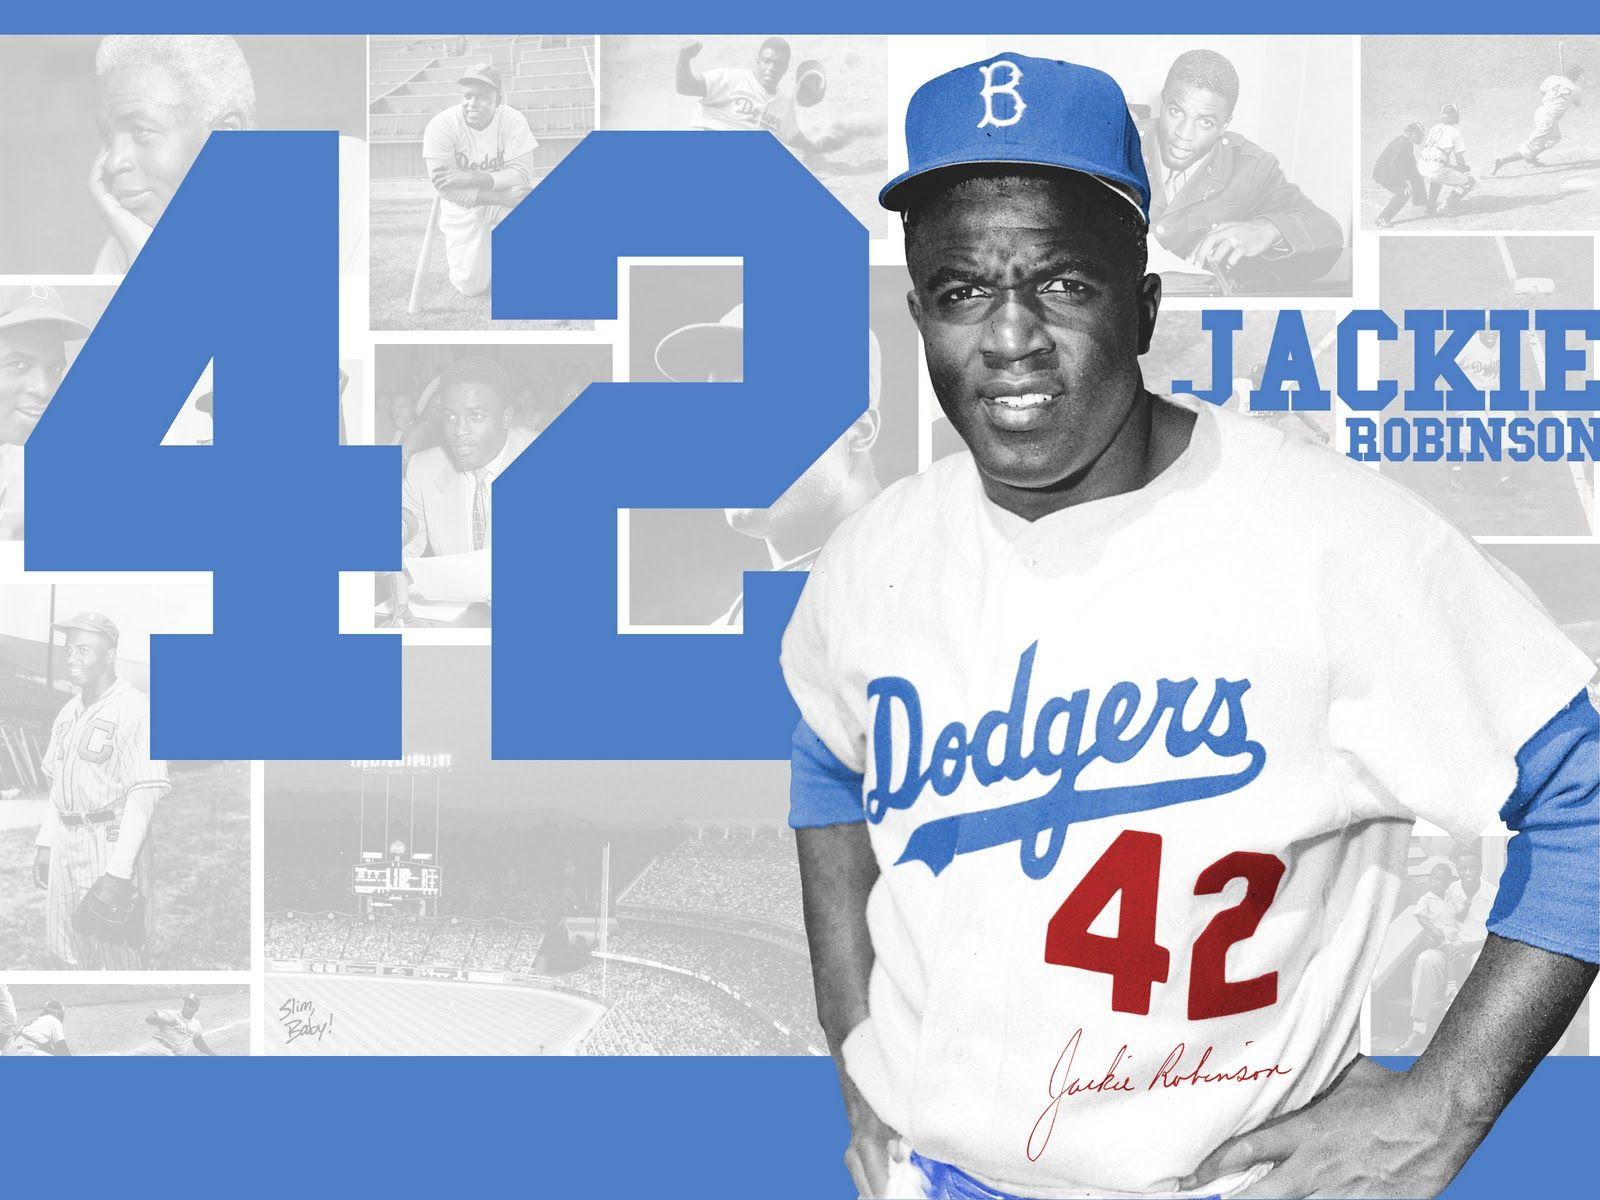 DBAT Bothell   74 years ago today Jackie Robinson stepped onto the  Major League Baseball stageJackieRobinsonDay DBAT  Facebook